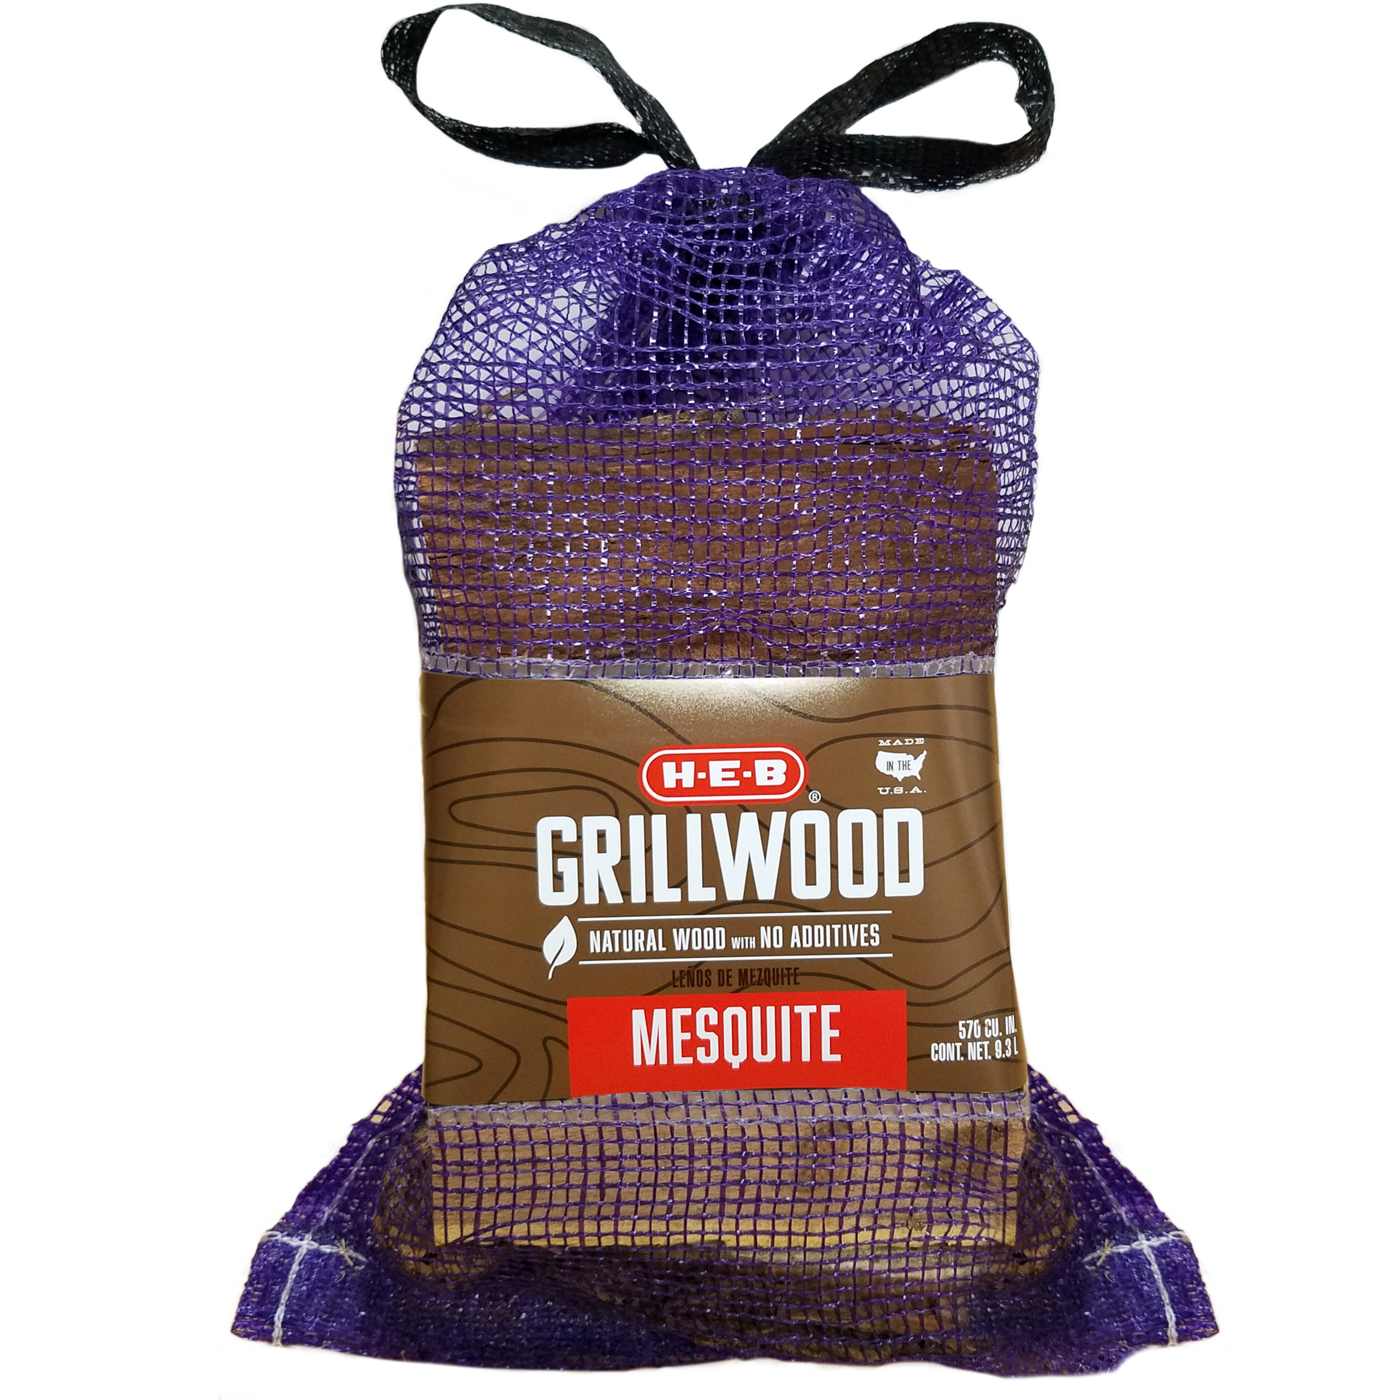 H-E-B Natural Mini Mesquite Grillwood; image 1 of 2